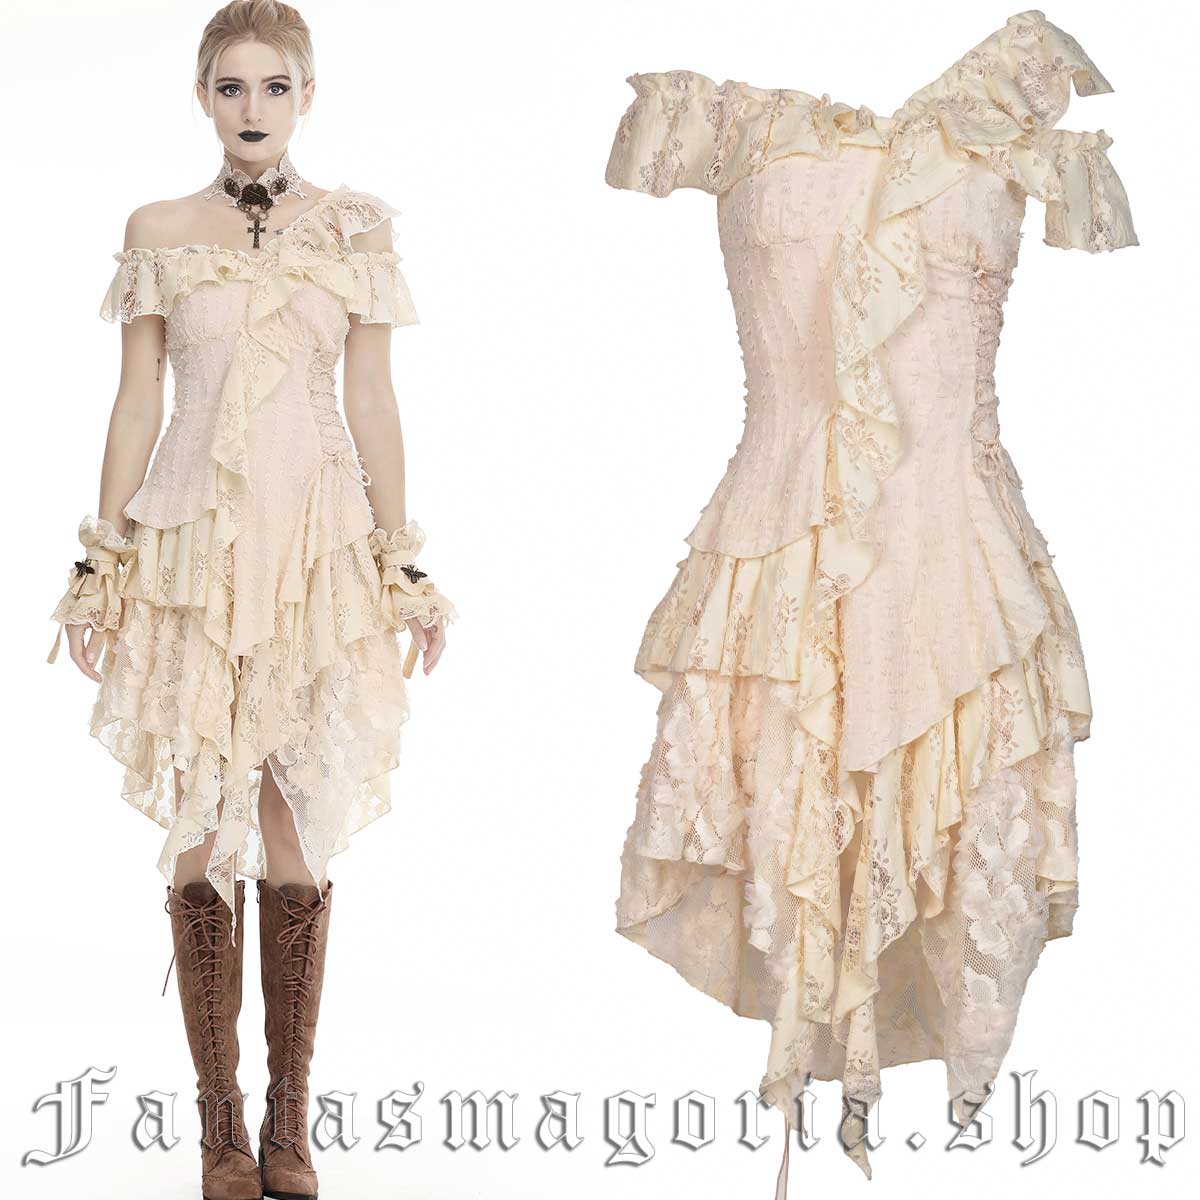 Women's Gothic Romantic beige asymmetric ruffly short layered skirt dress. - Dark in Love - DW451